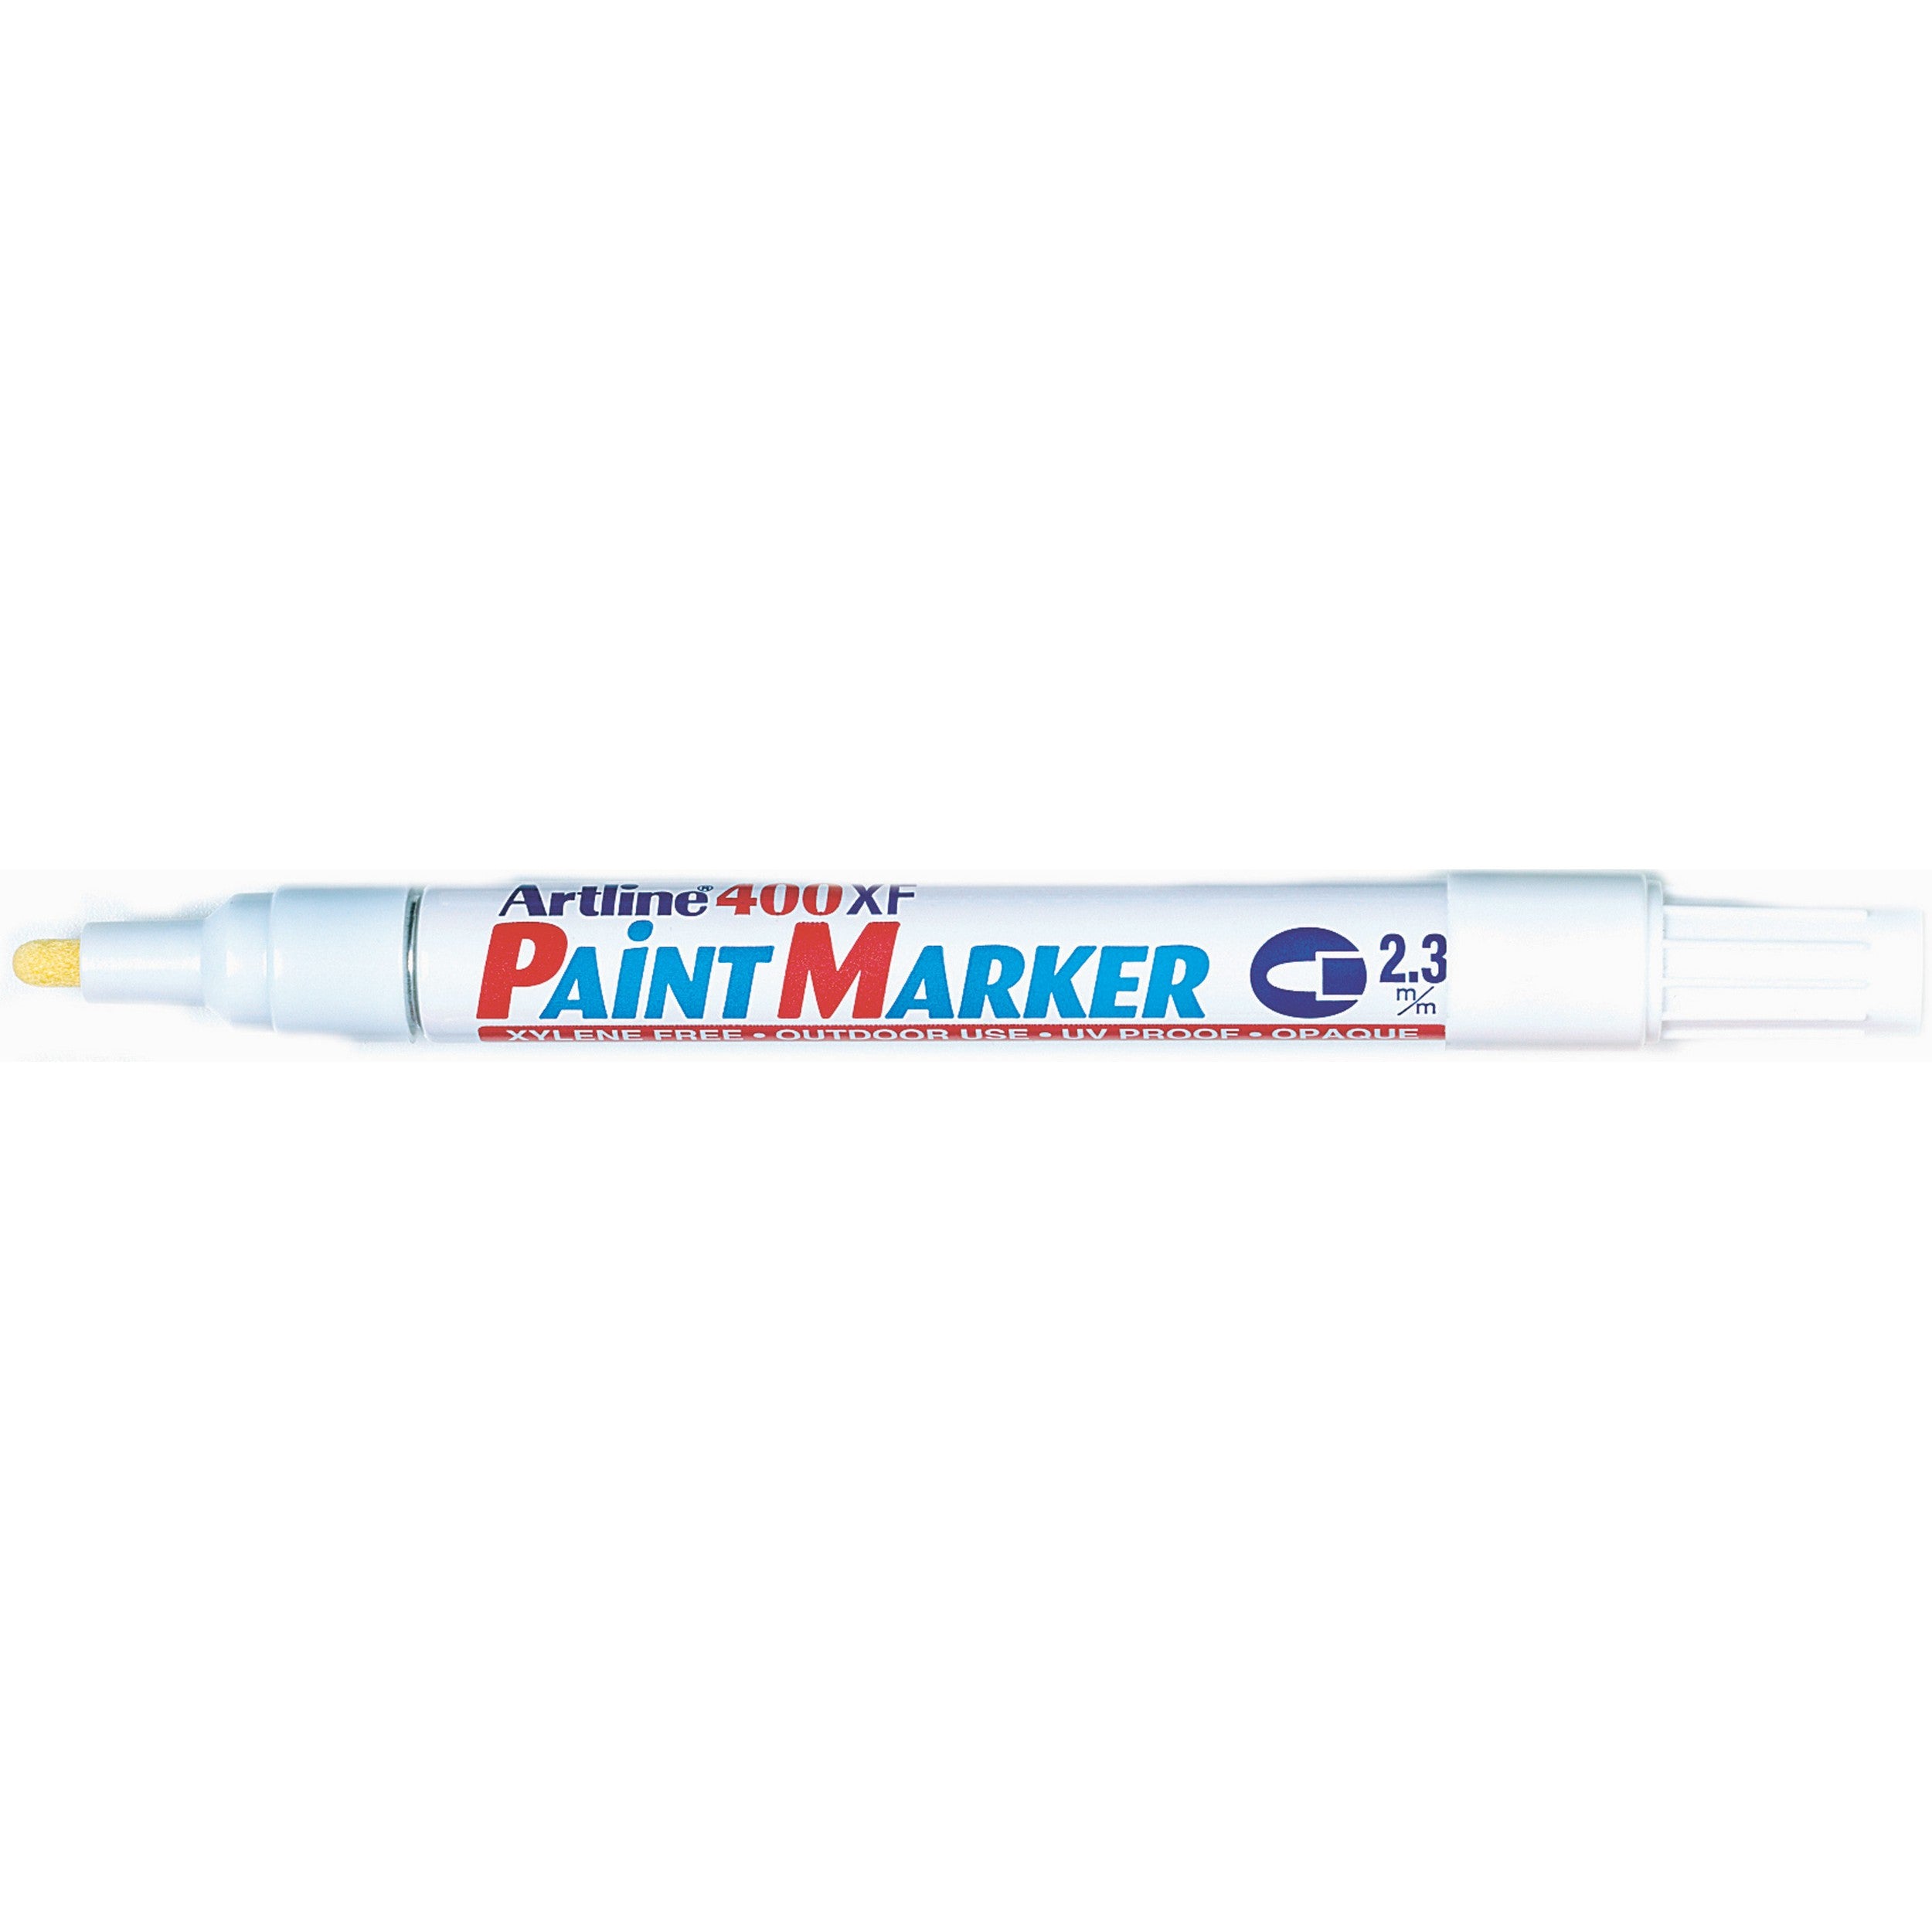 Artline Paint Marker 400XF, white, lid off